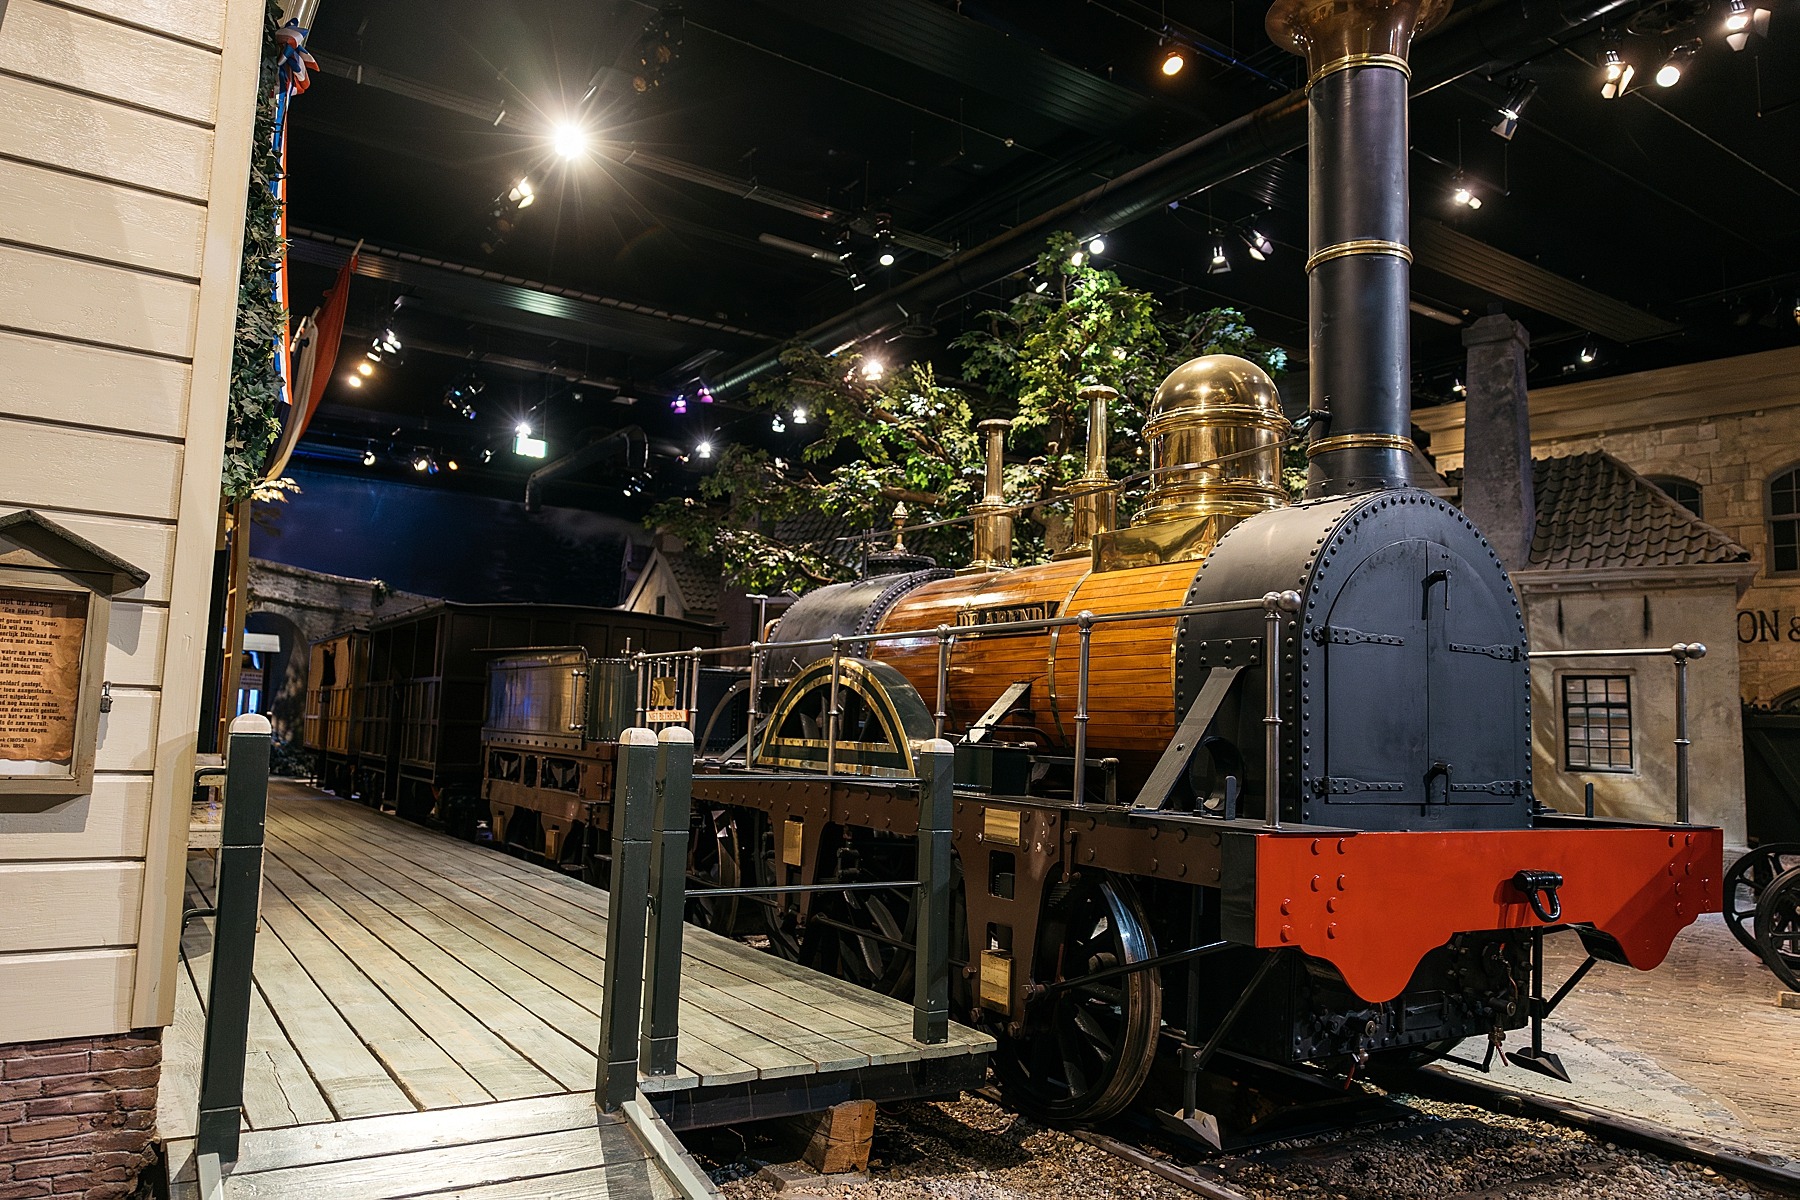 Spoorwegmuseum, l'incroyable musée du train de Utrecht 28